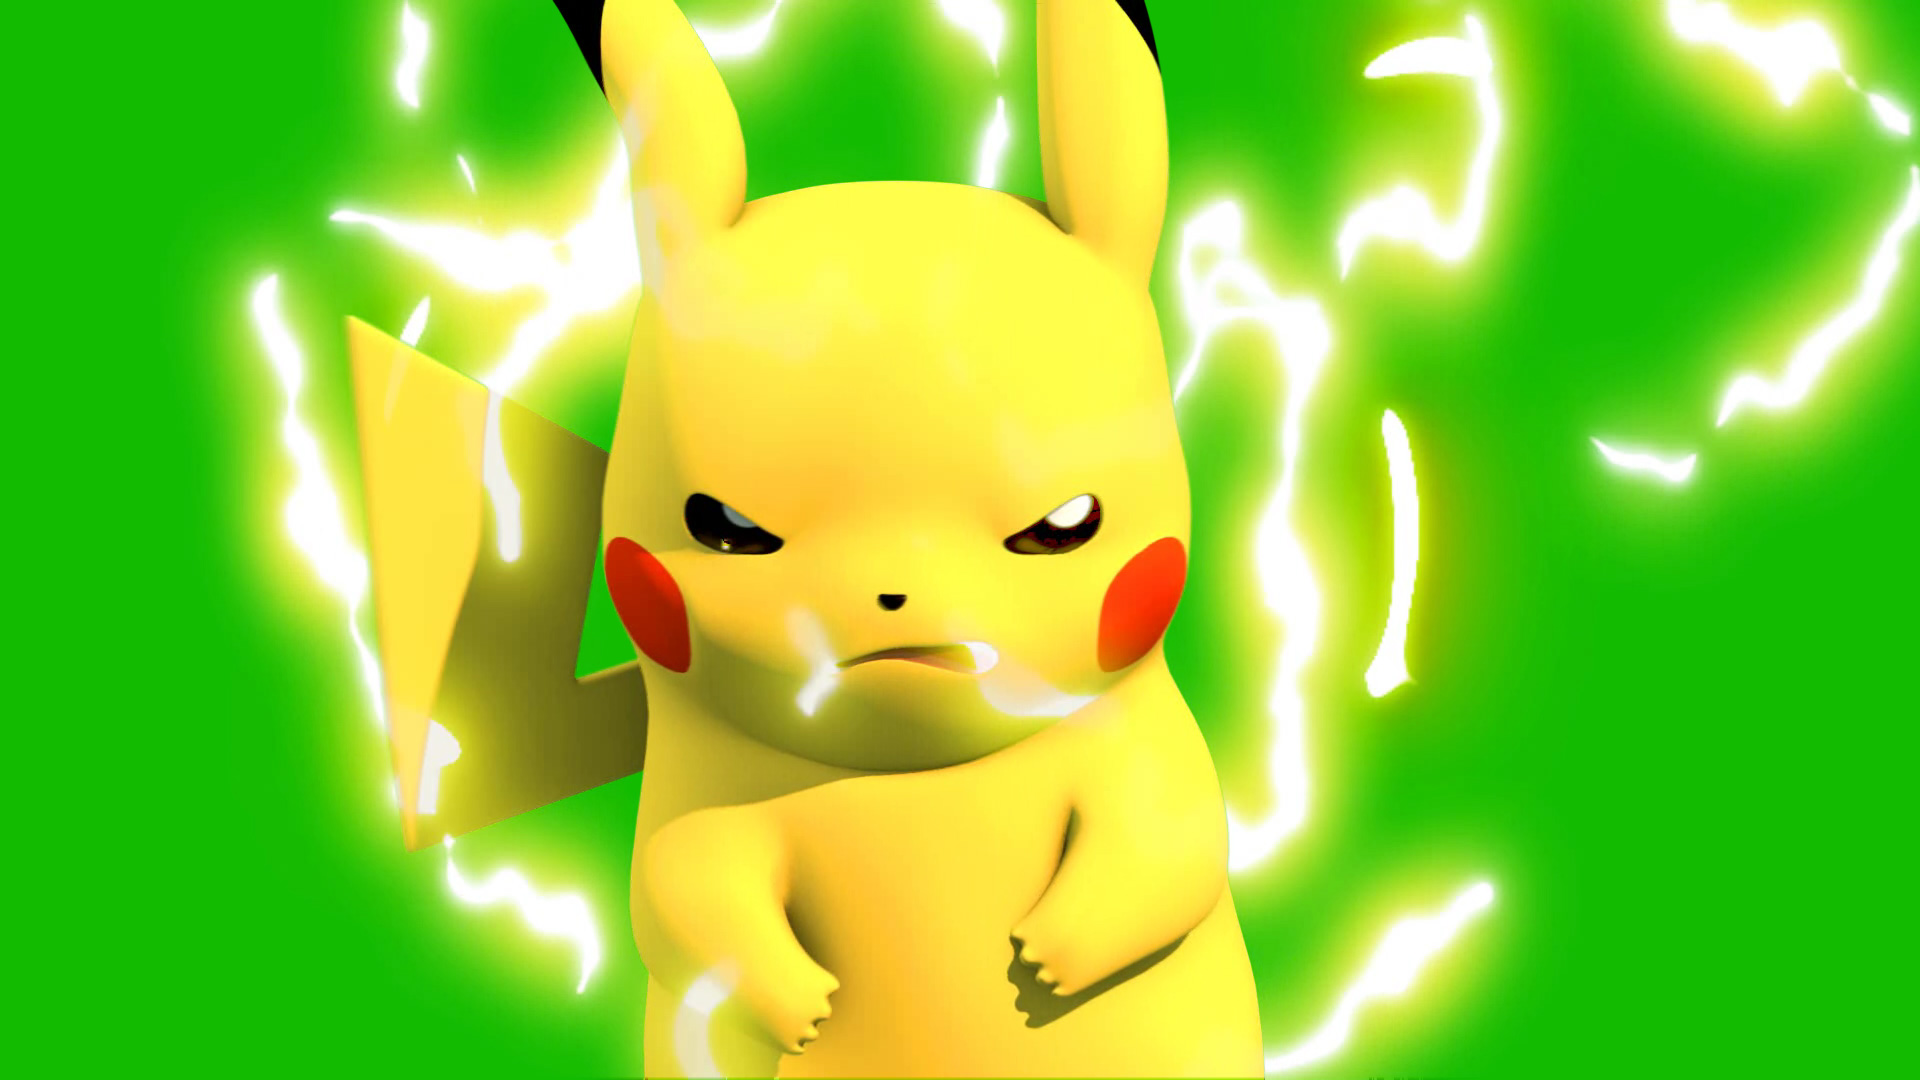 moving pokemon wallpapers,green,yellow,cartoon,graphics,clip art